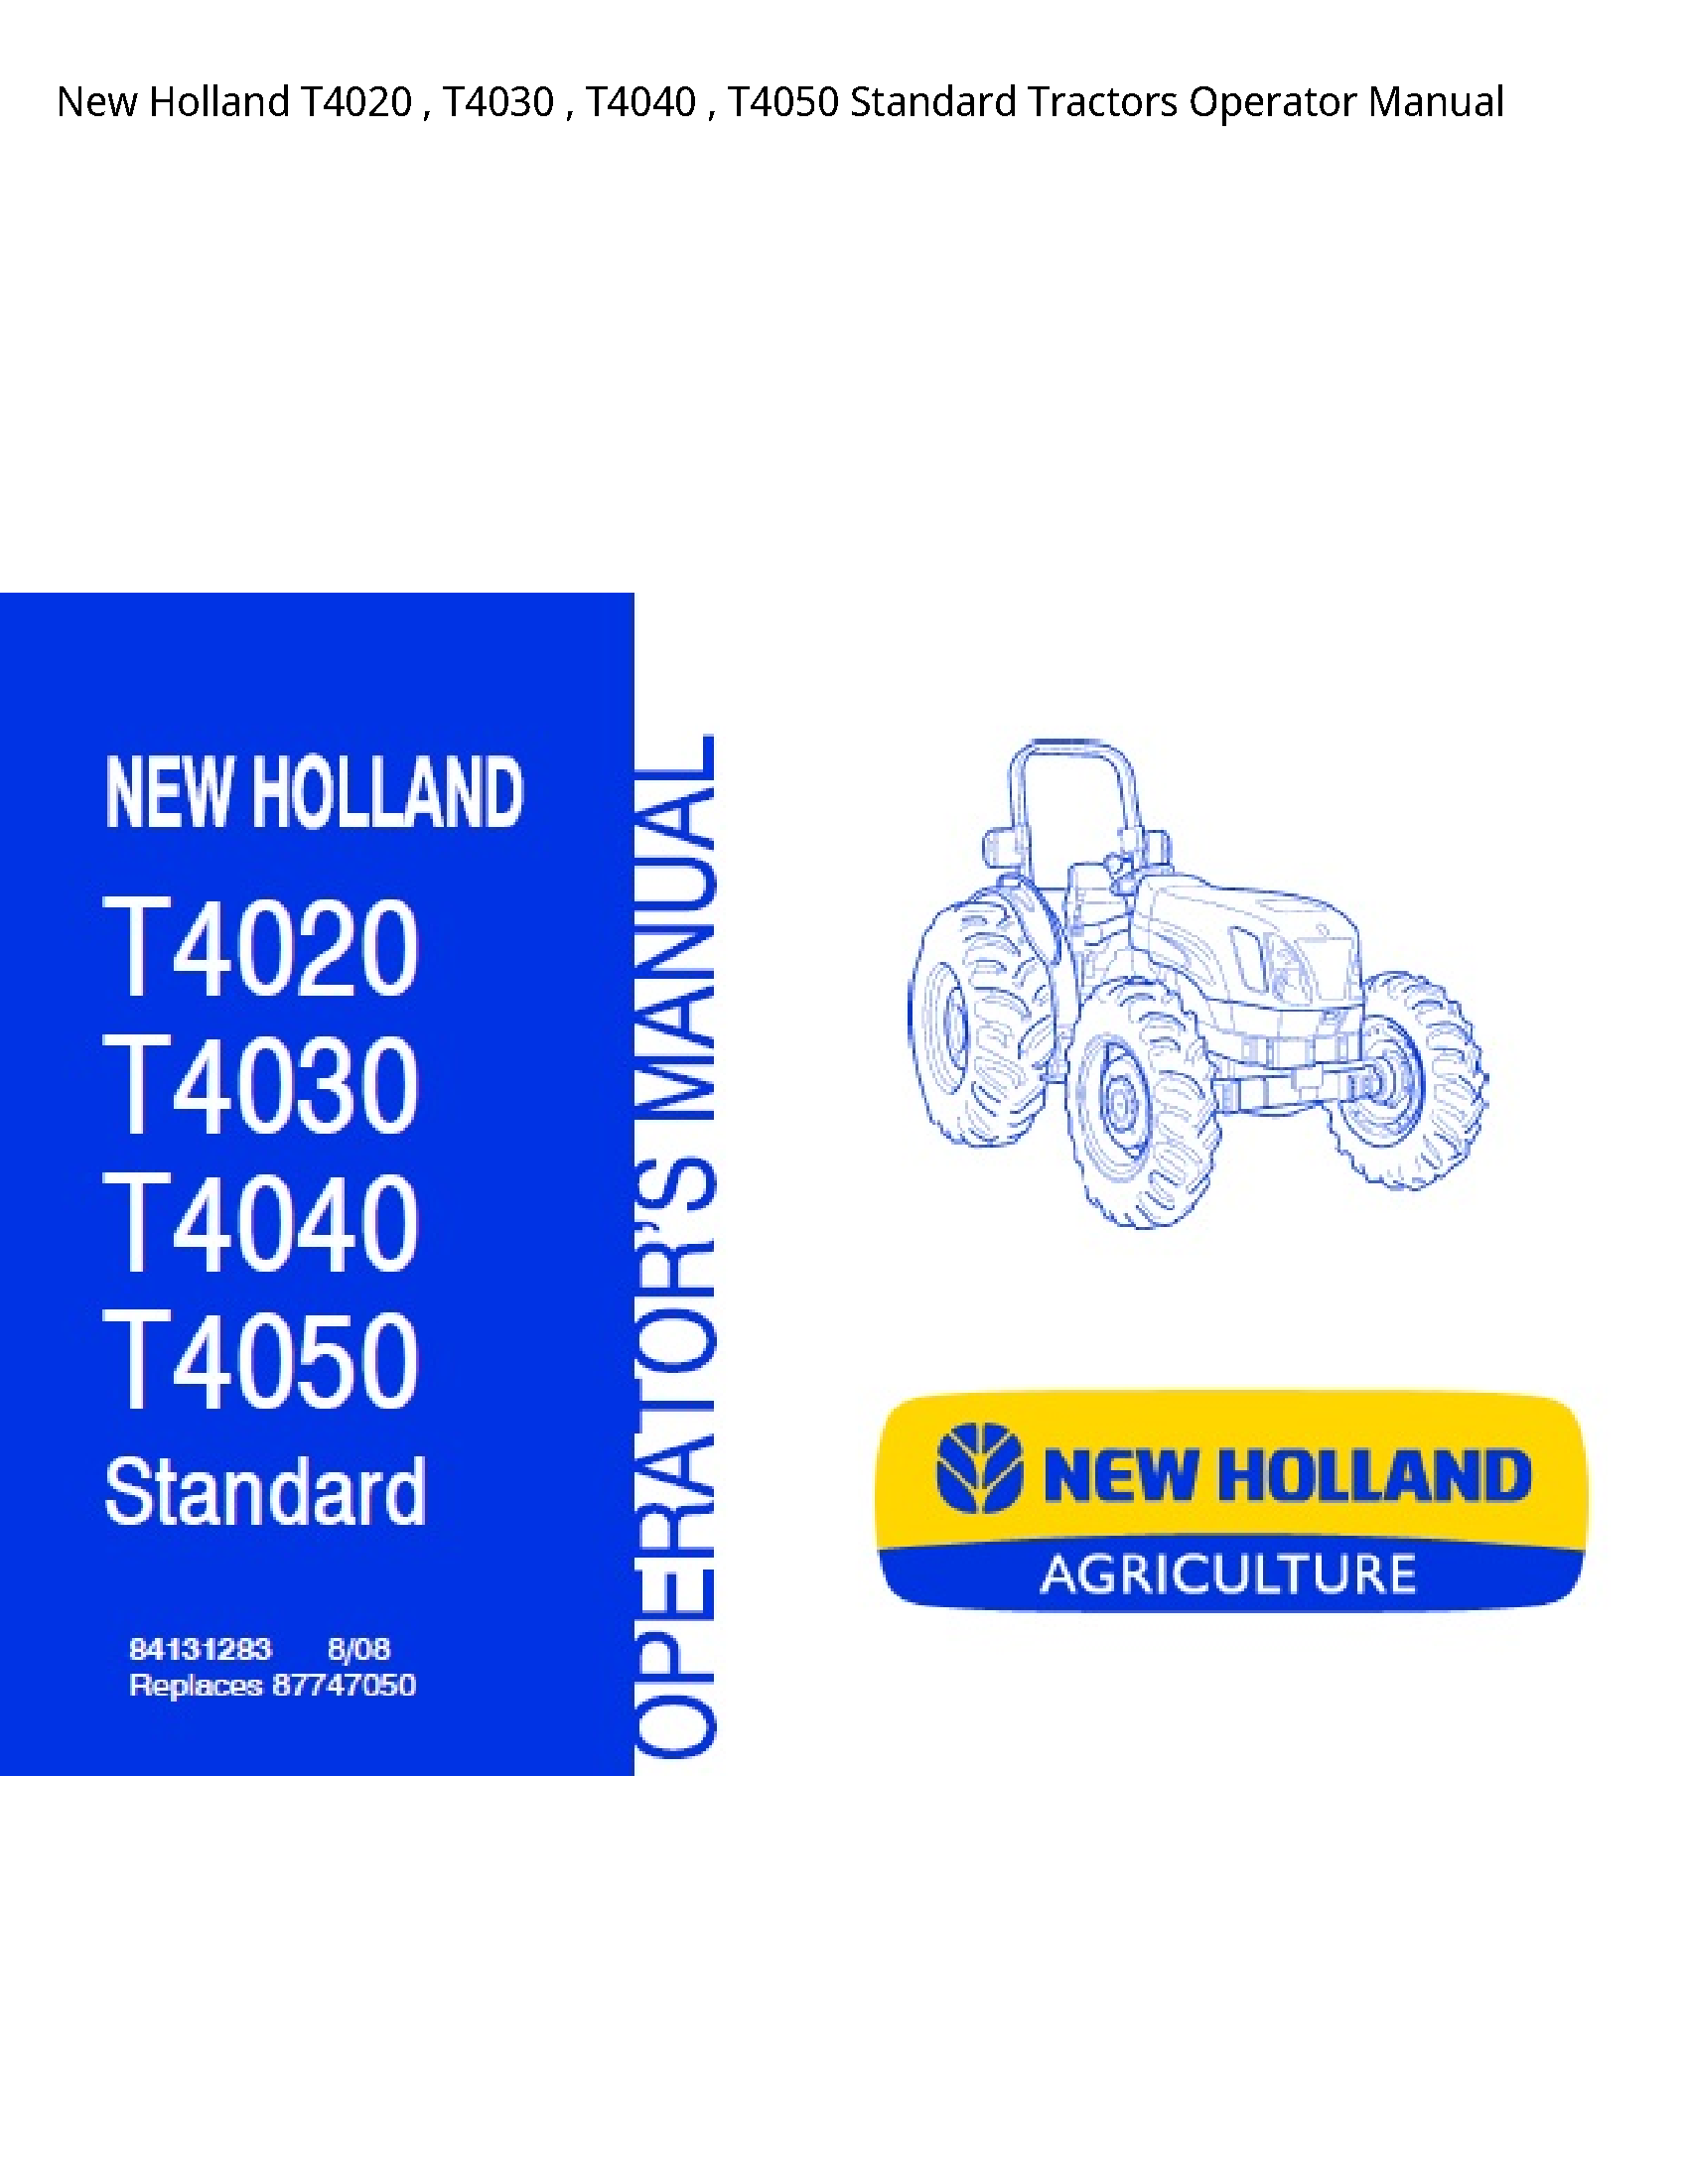 New Holland T4020 Standard Tractors Operator manual